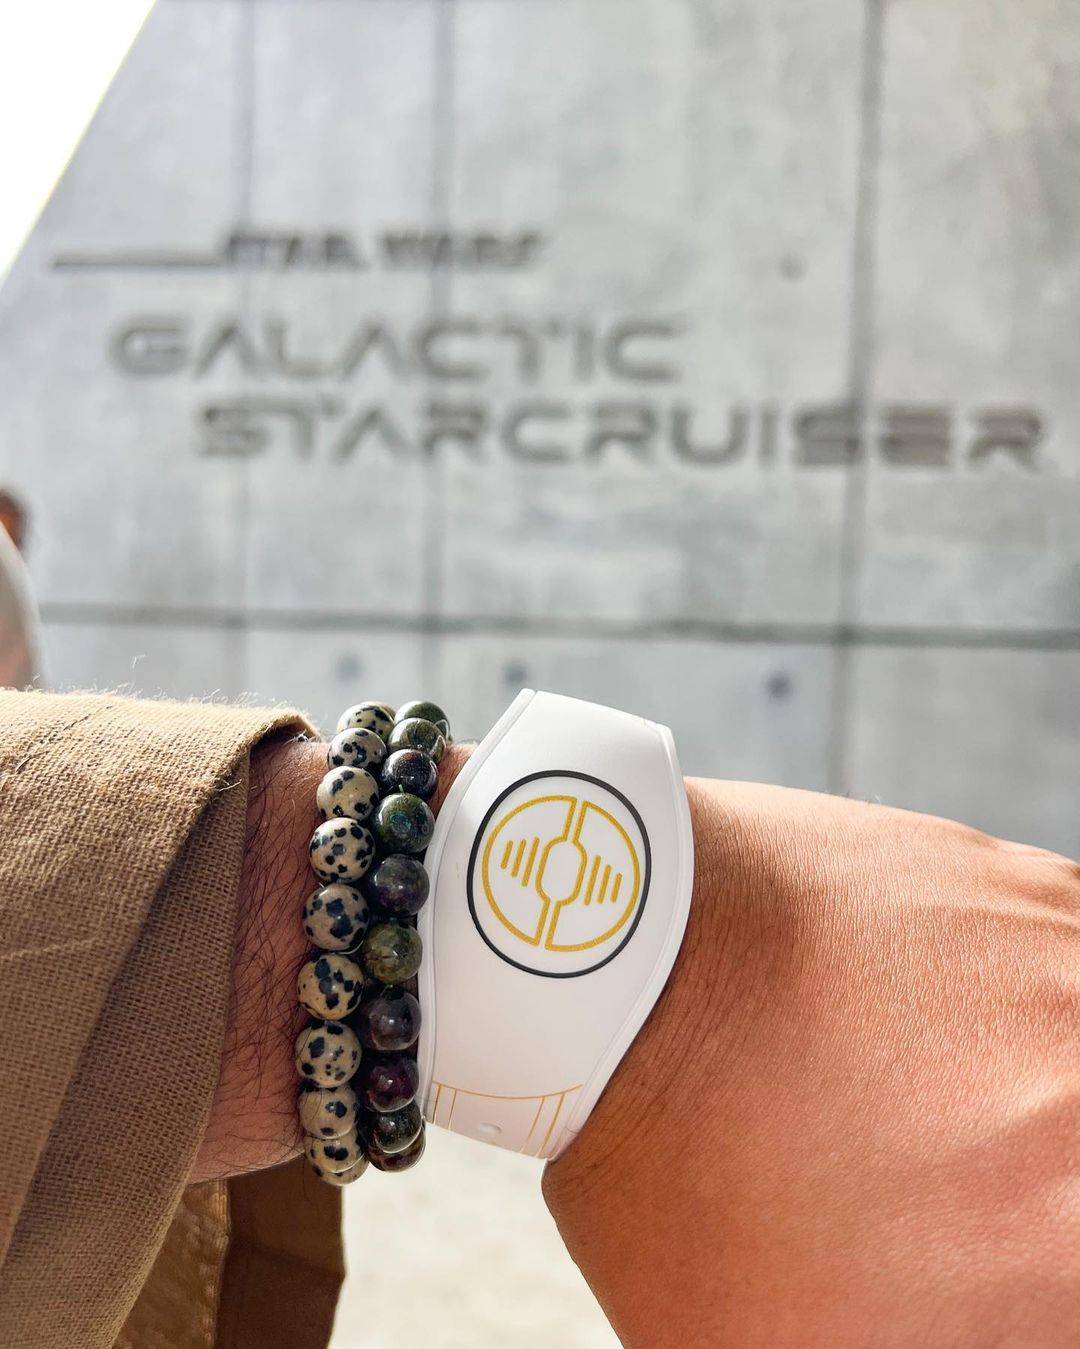 Star Wars Galactic Starcruiser Magic Band - @francisdominiic on Instagram